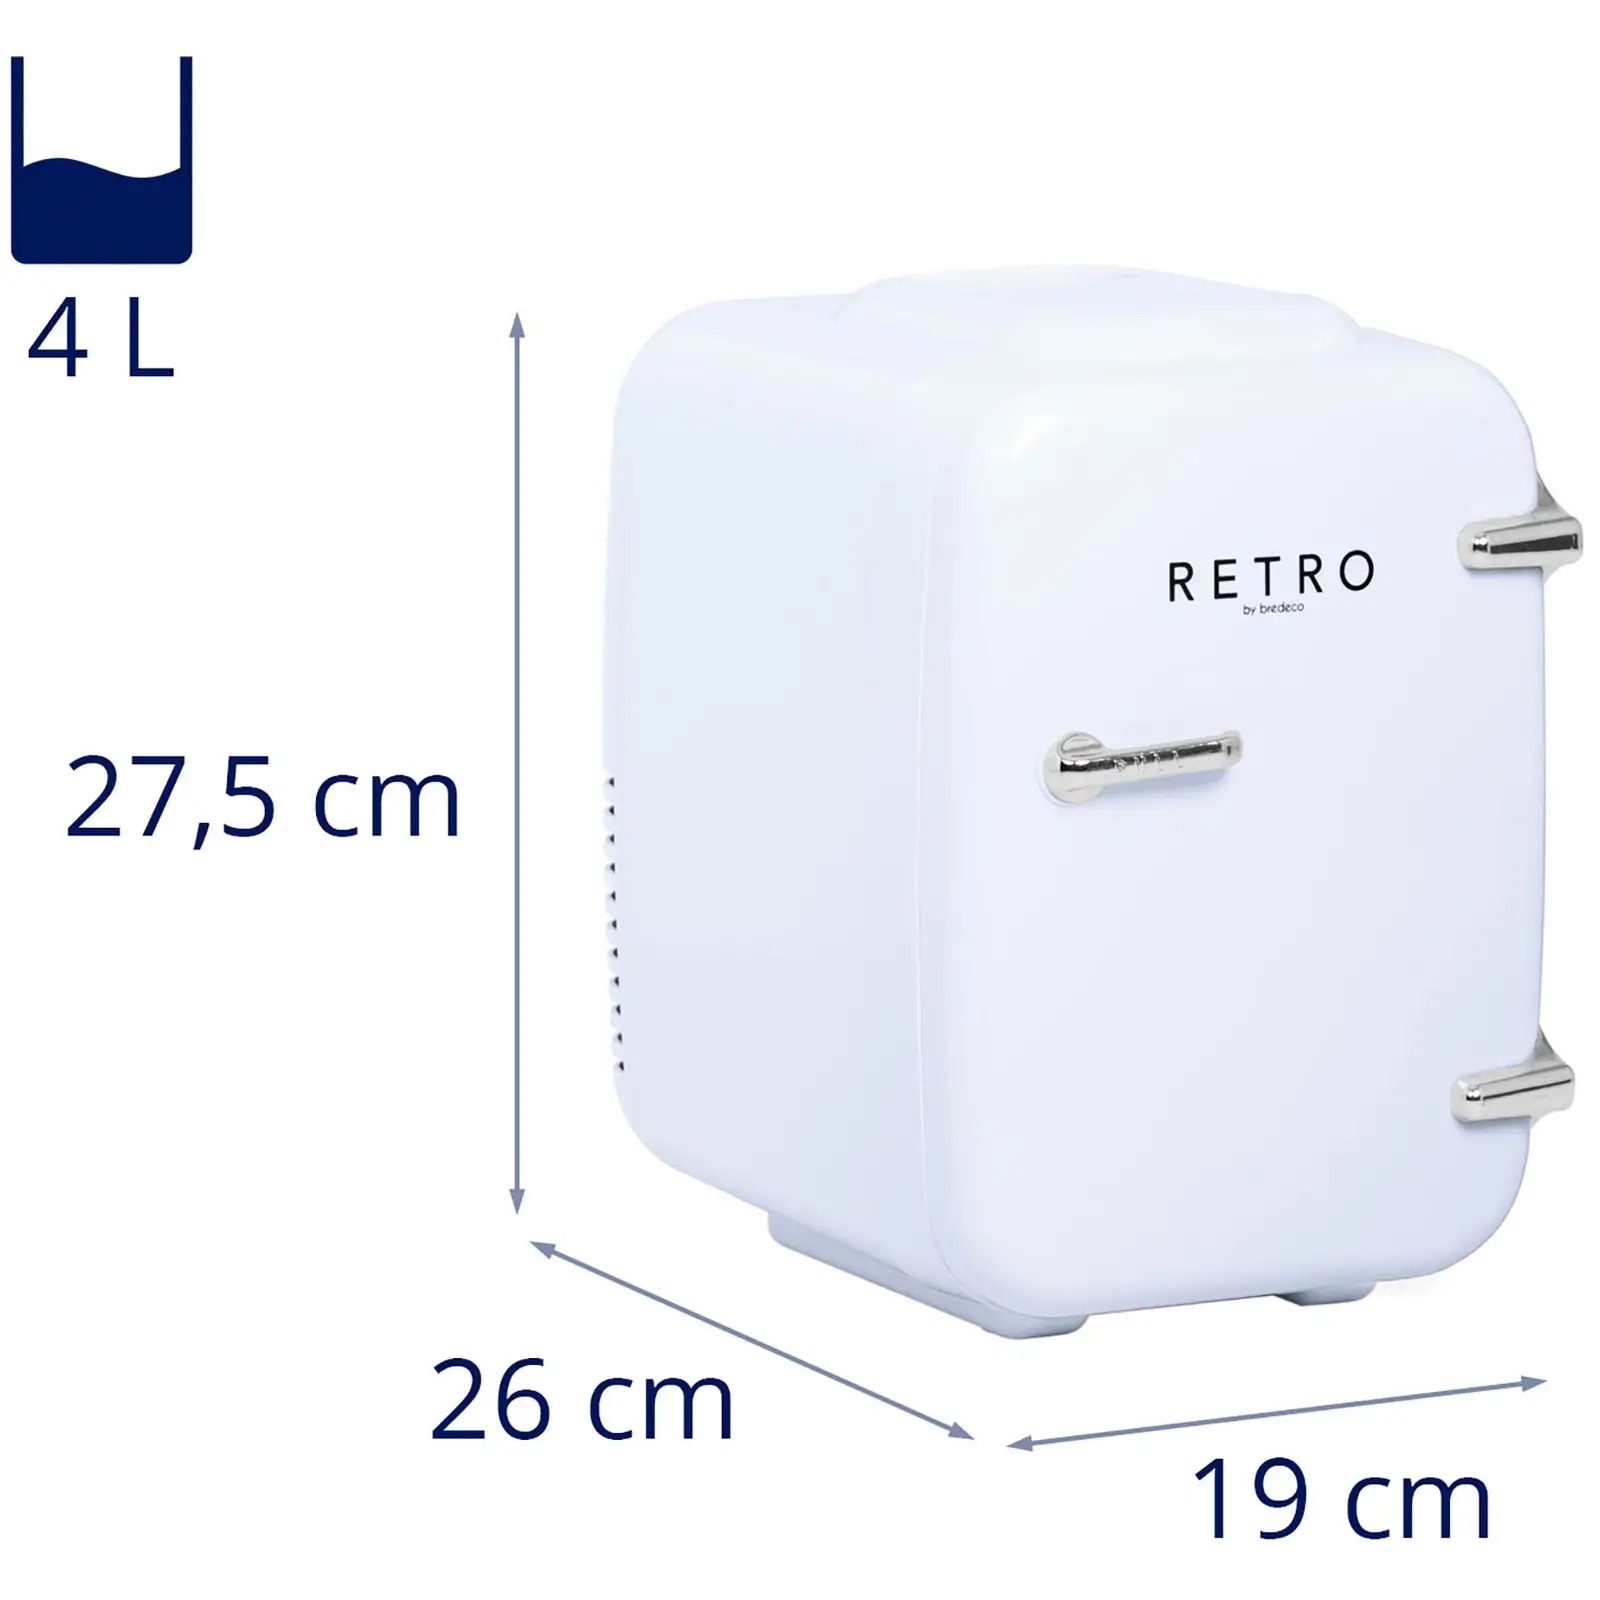 Mini refrigerador - 4 L - blanco